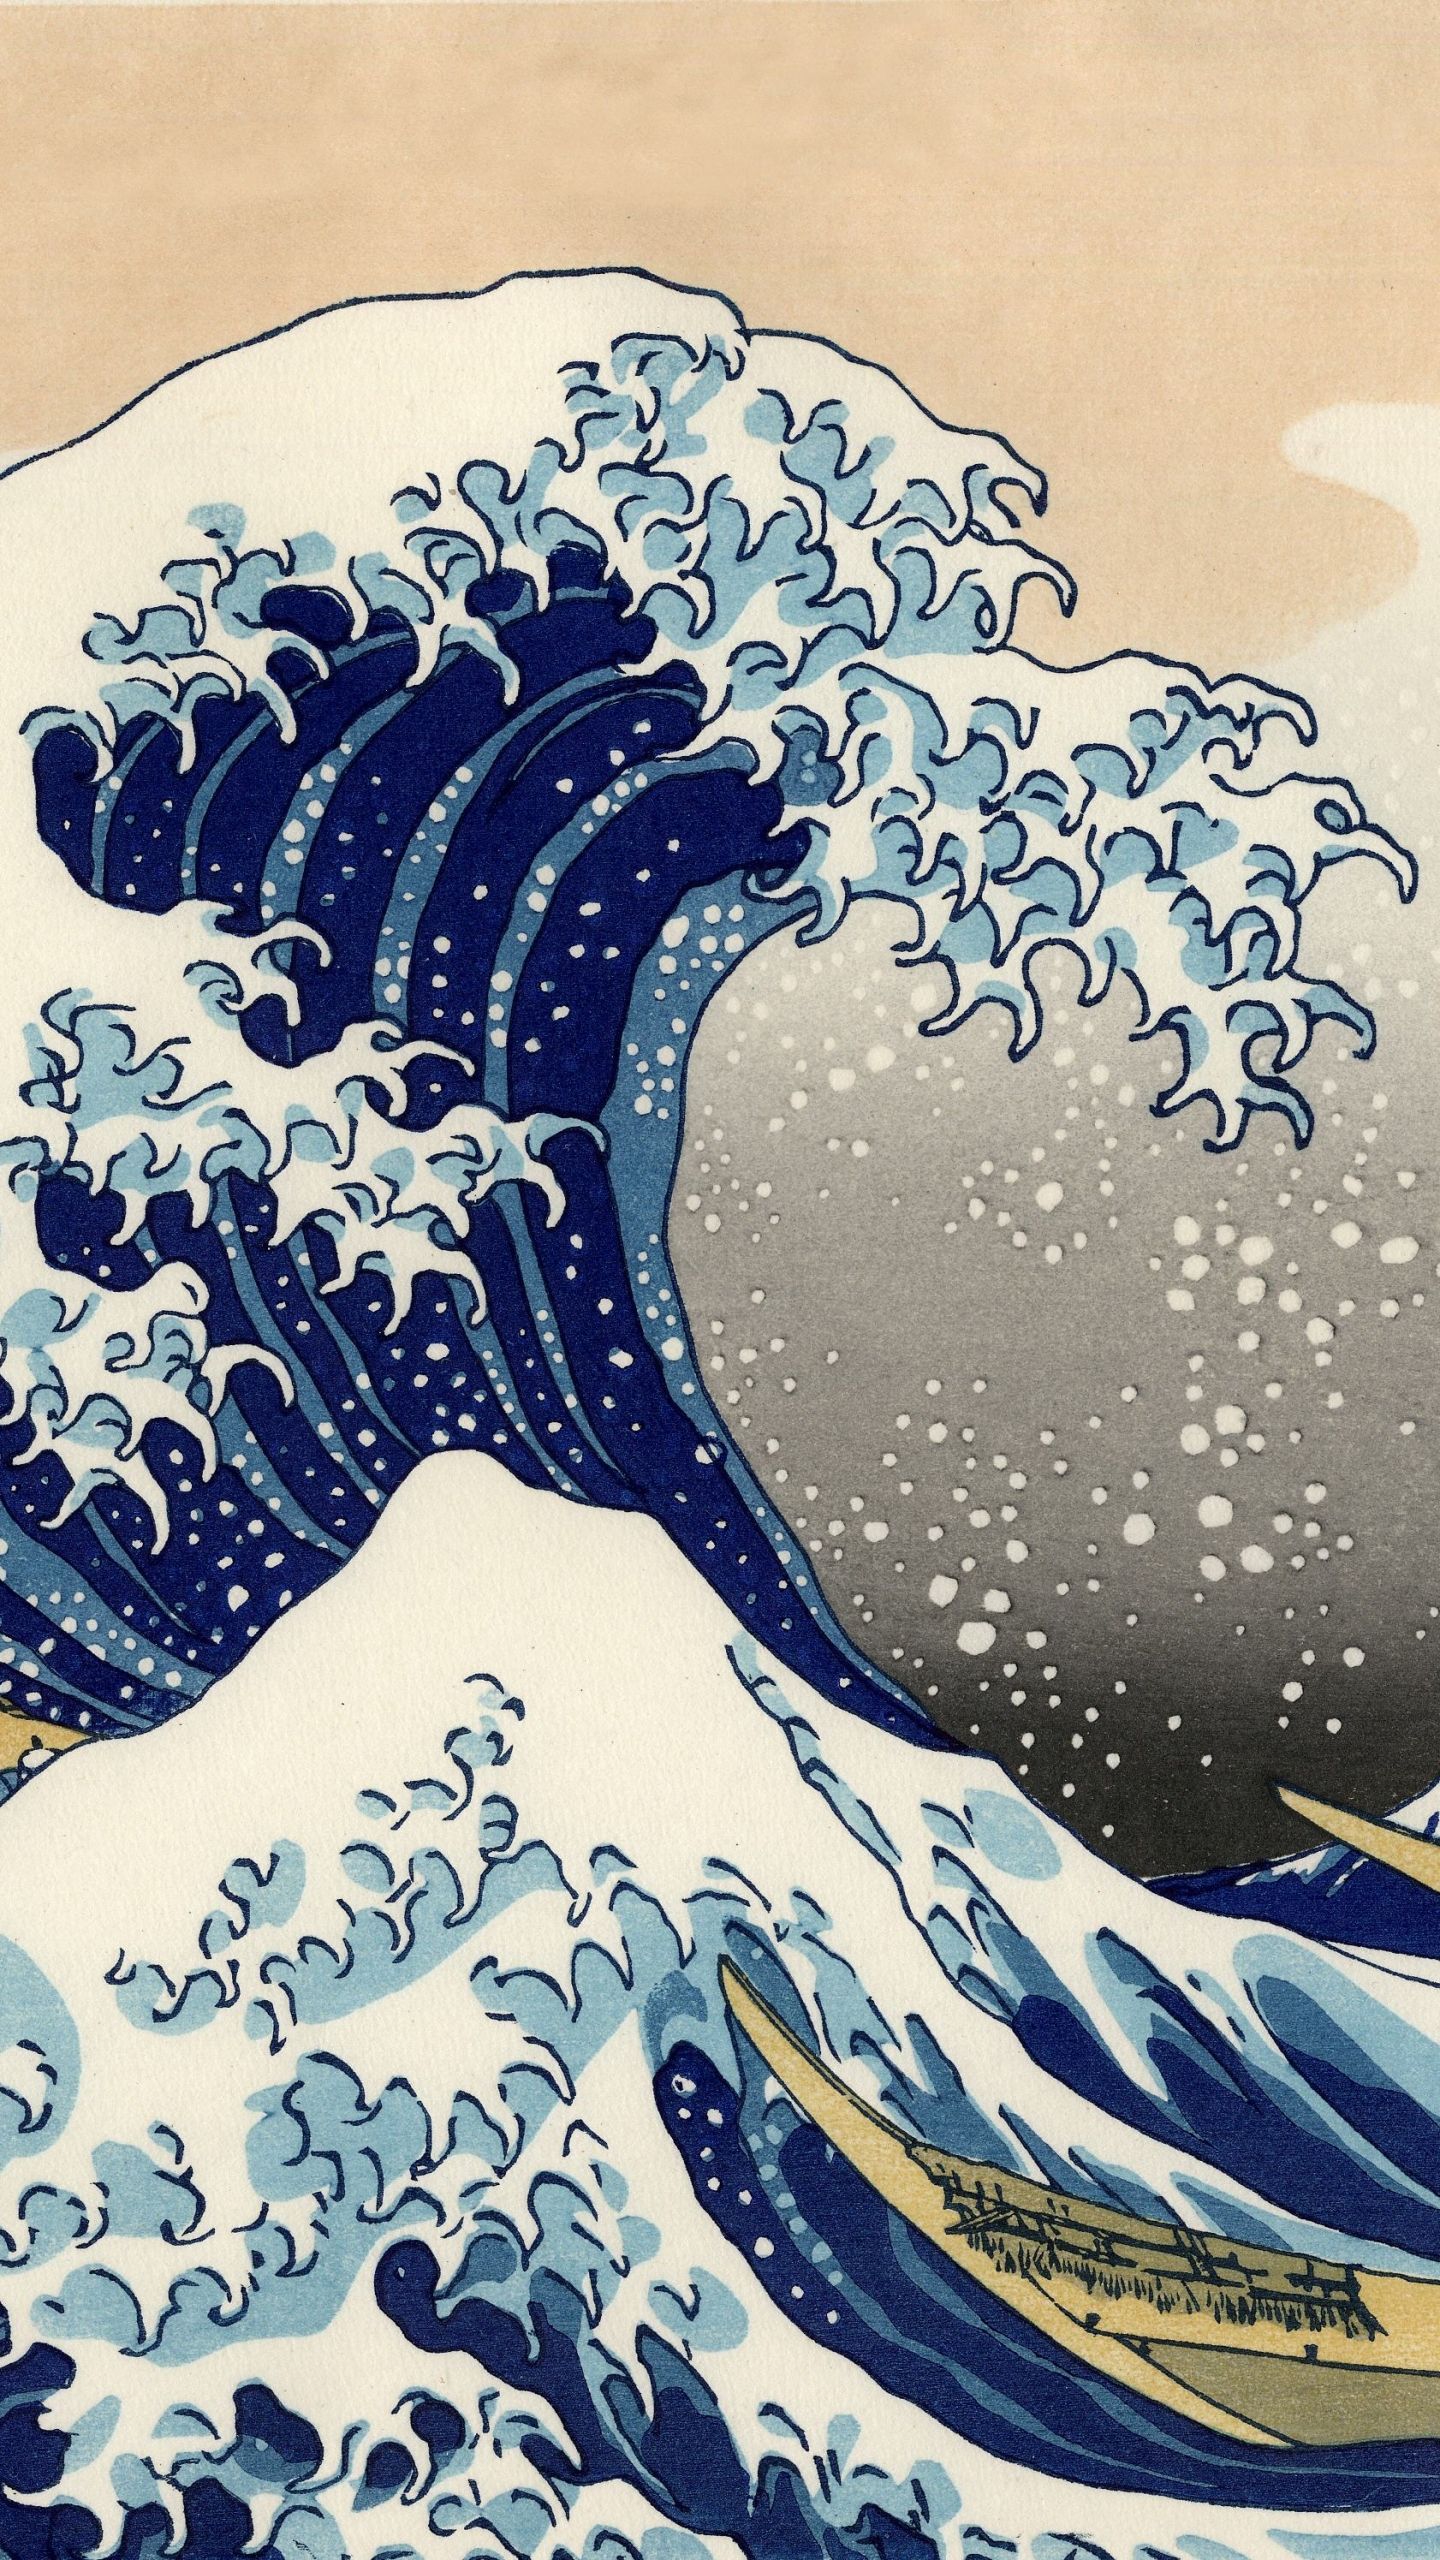 Wallpaper ID 337220  Artistic The Great Wave off Kanagawa Phone Wallpaper  Wave 1284x2778 free download